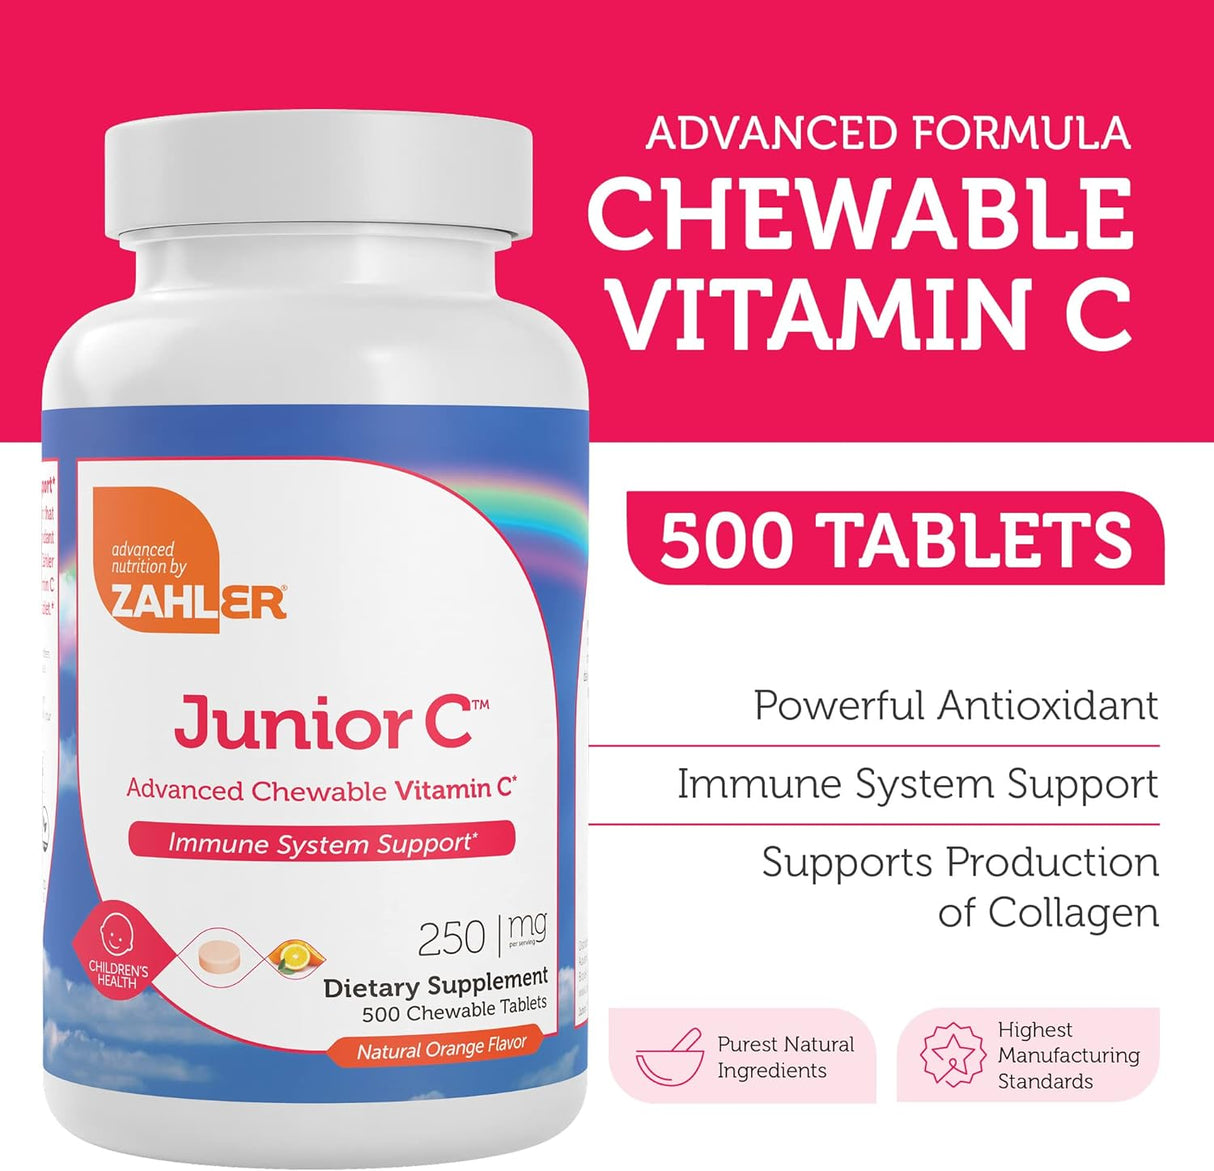 Zahler Junior C Advanced Chewable Vitamin C for Kids 500 Tabletas Masticables